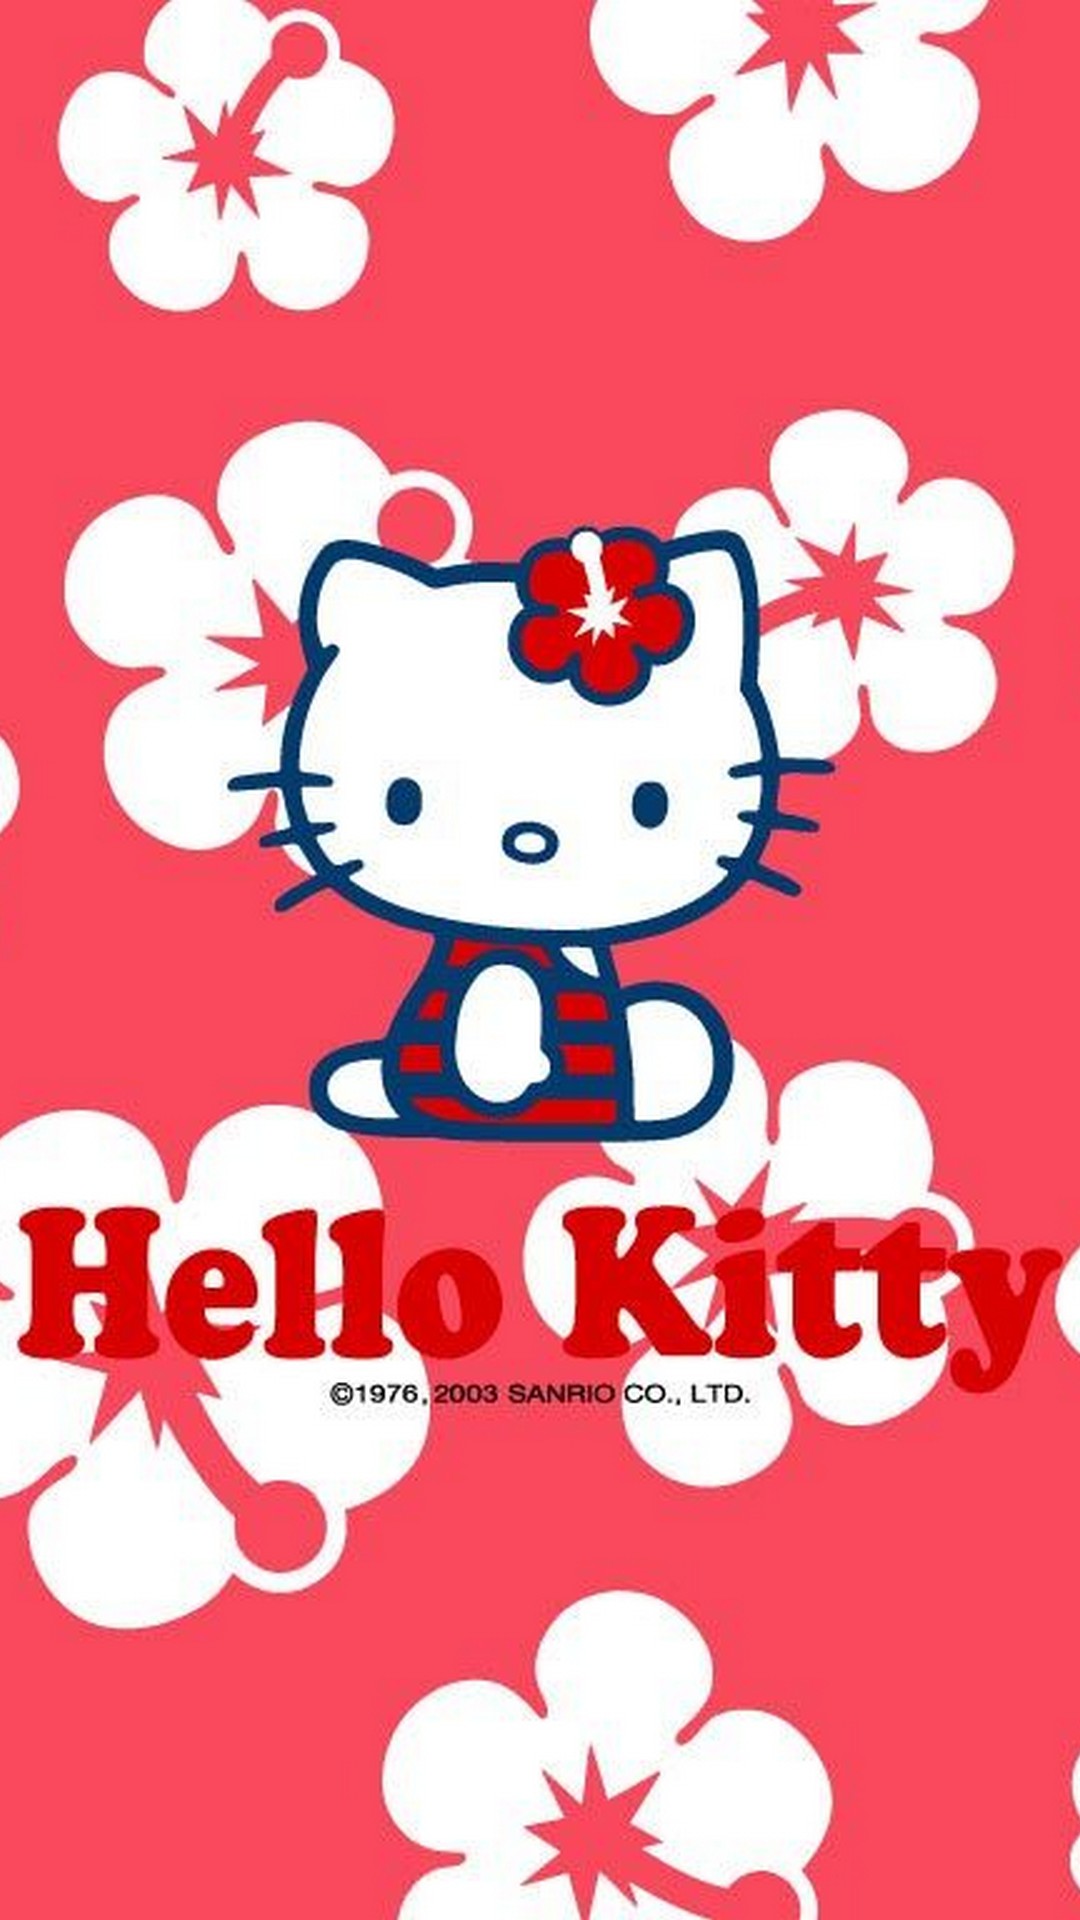 Android Wallpaper Hello Kitty - 2020